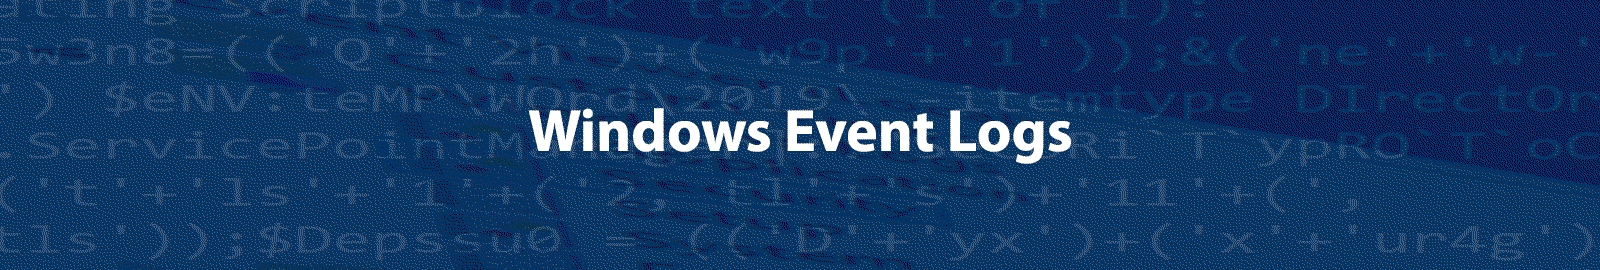 Windows event logs